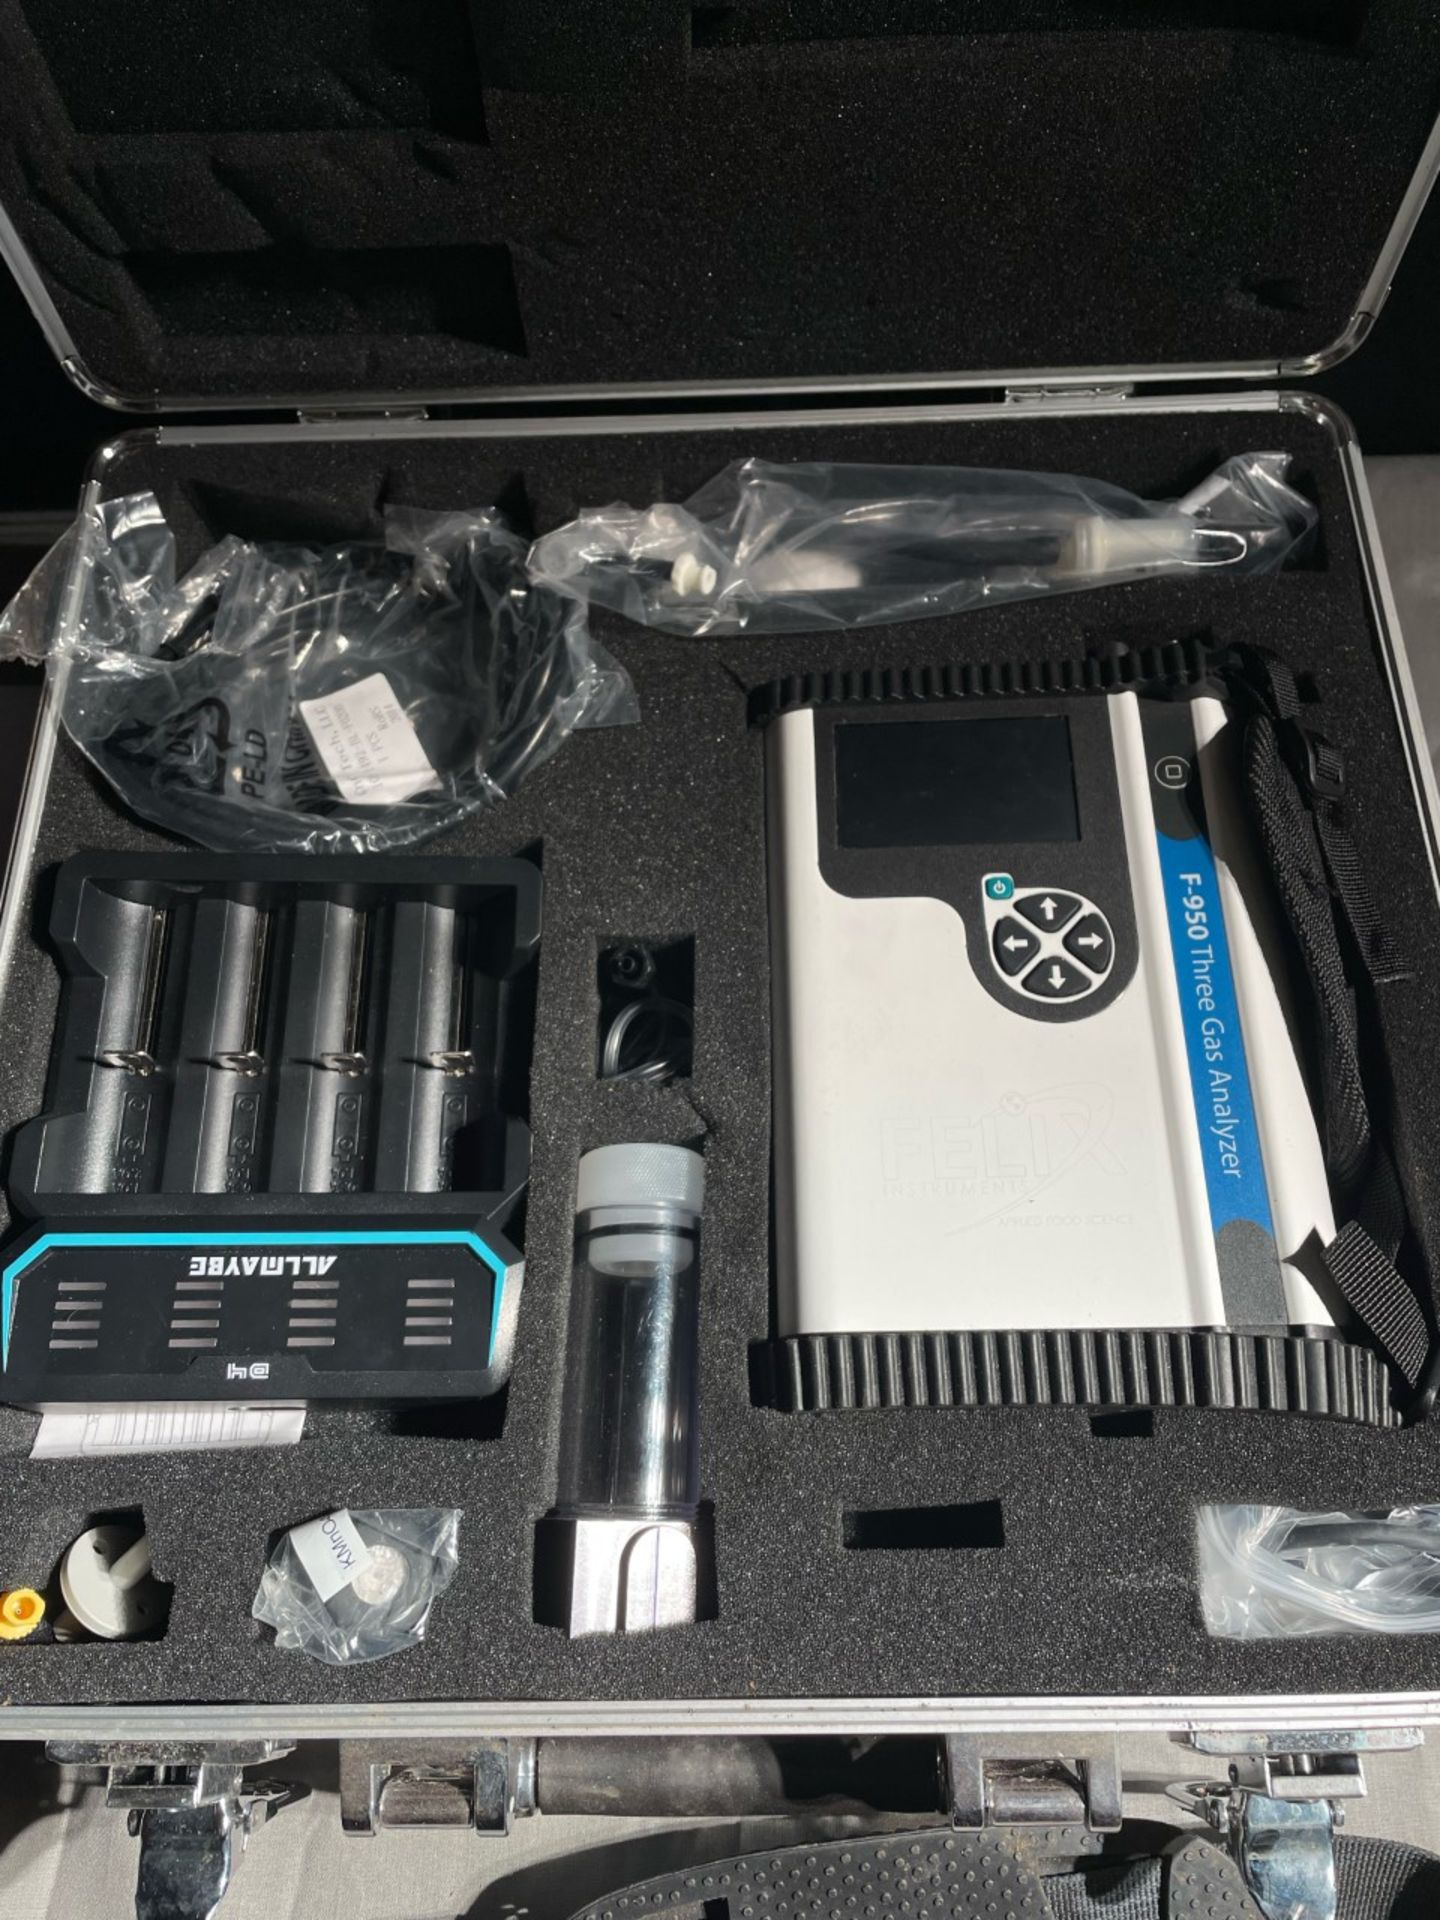 1x Felix F-950 three gas analyzer. Everything in box looks new and in original packaging - Bild 2 aus 4